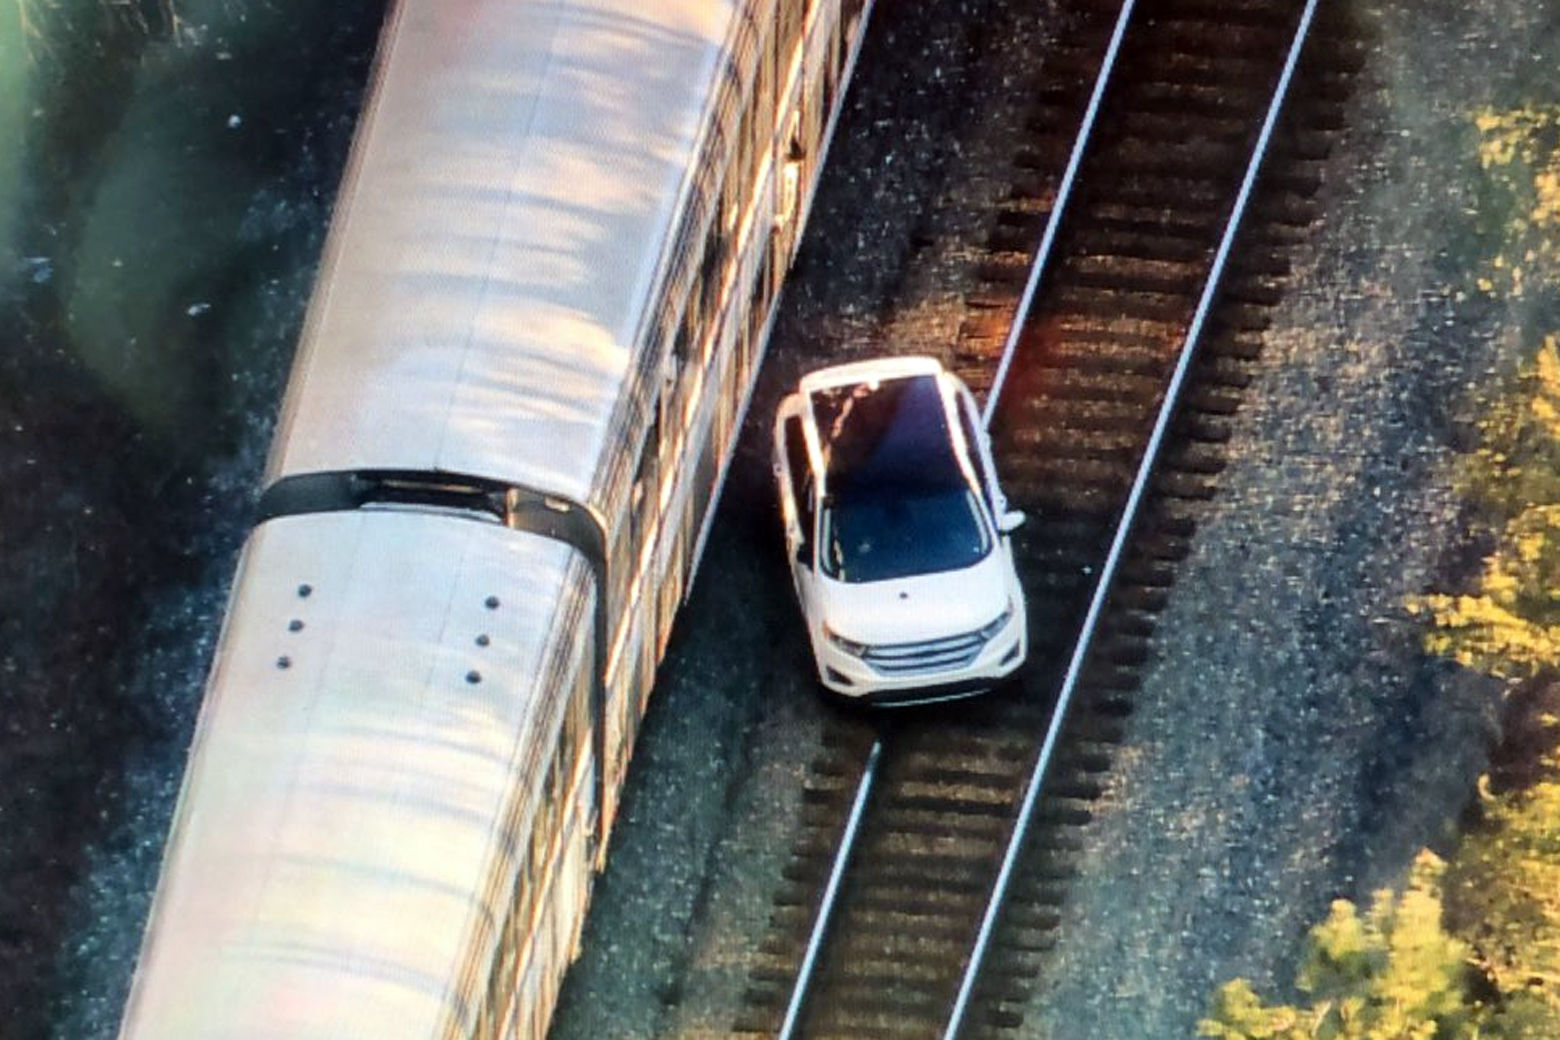 Amtrak train strikes car on tracks in Va. after man makes wrong turn